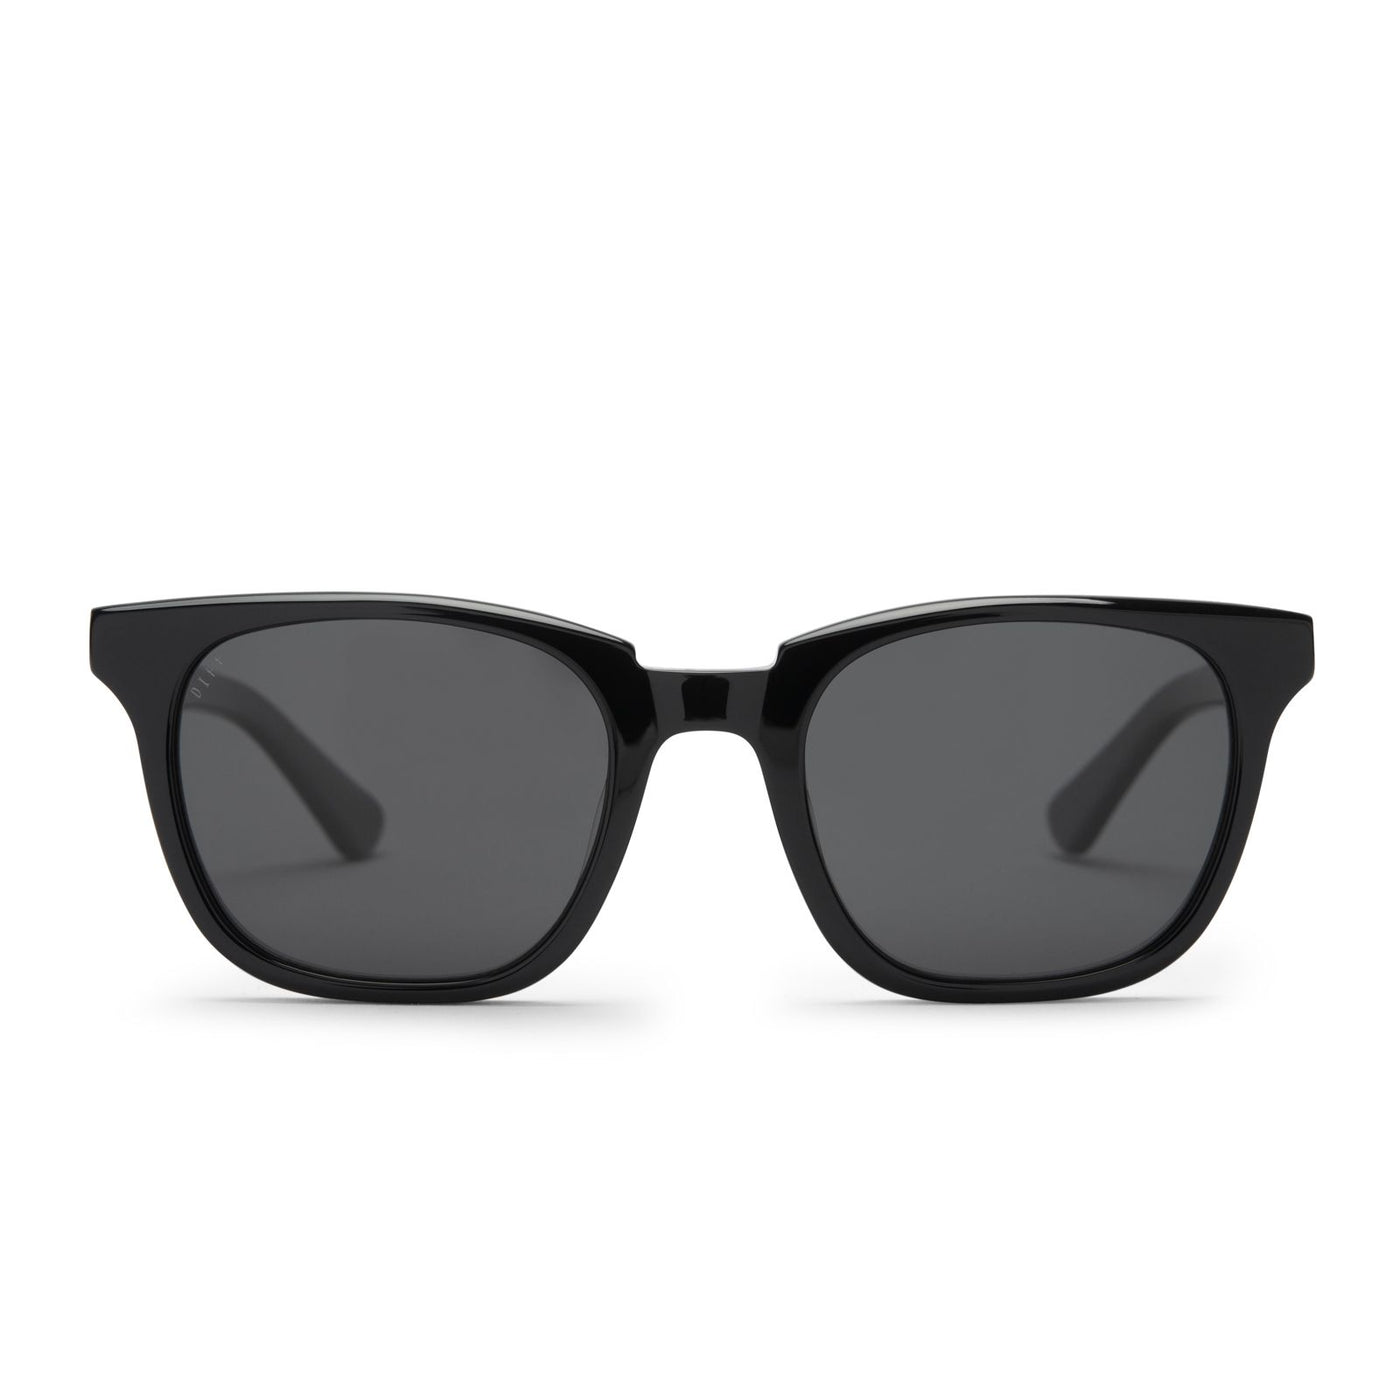 DIFF Colton - Black + Grey Polarized Lens Sunglasses